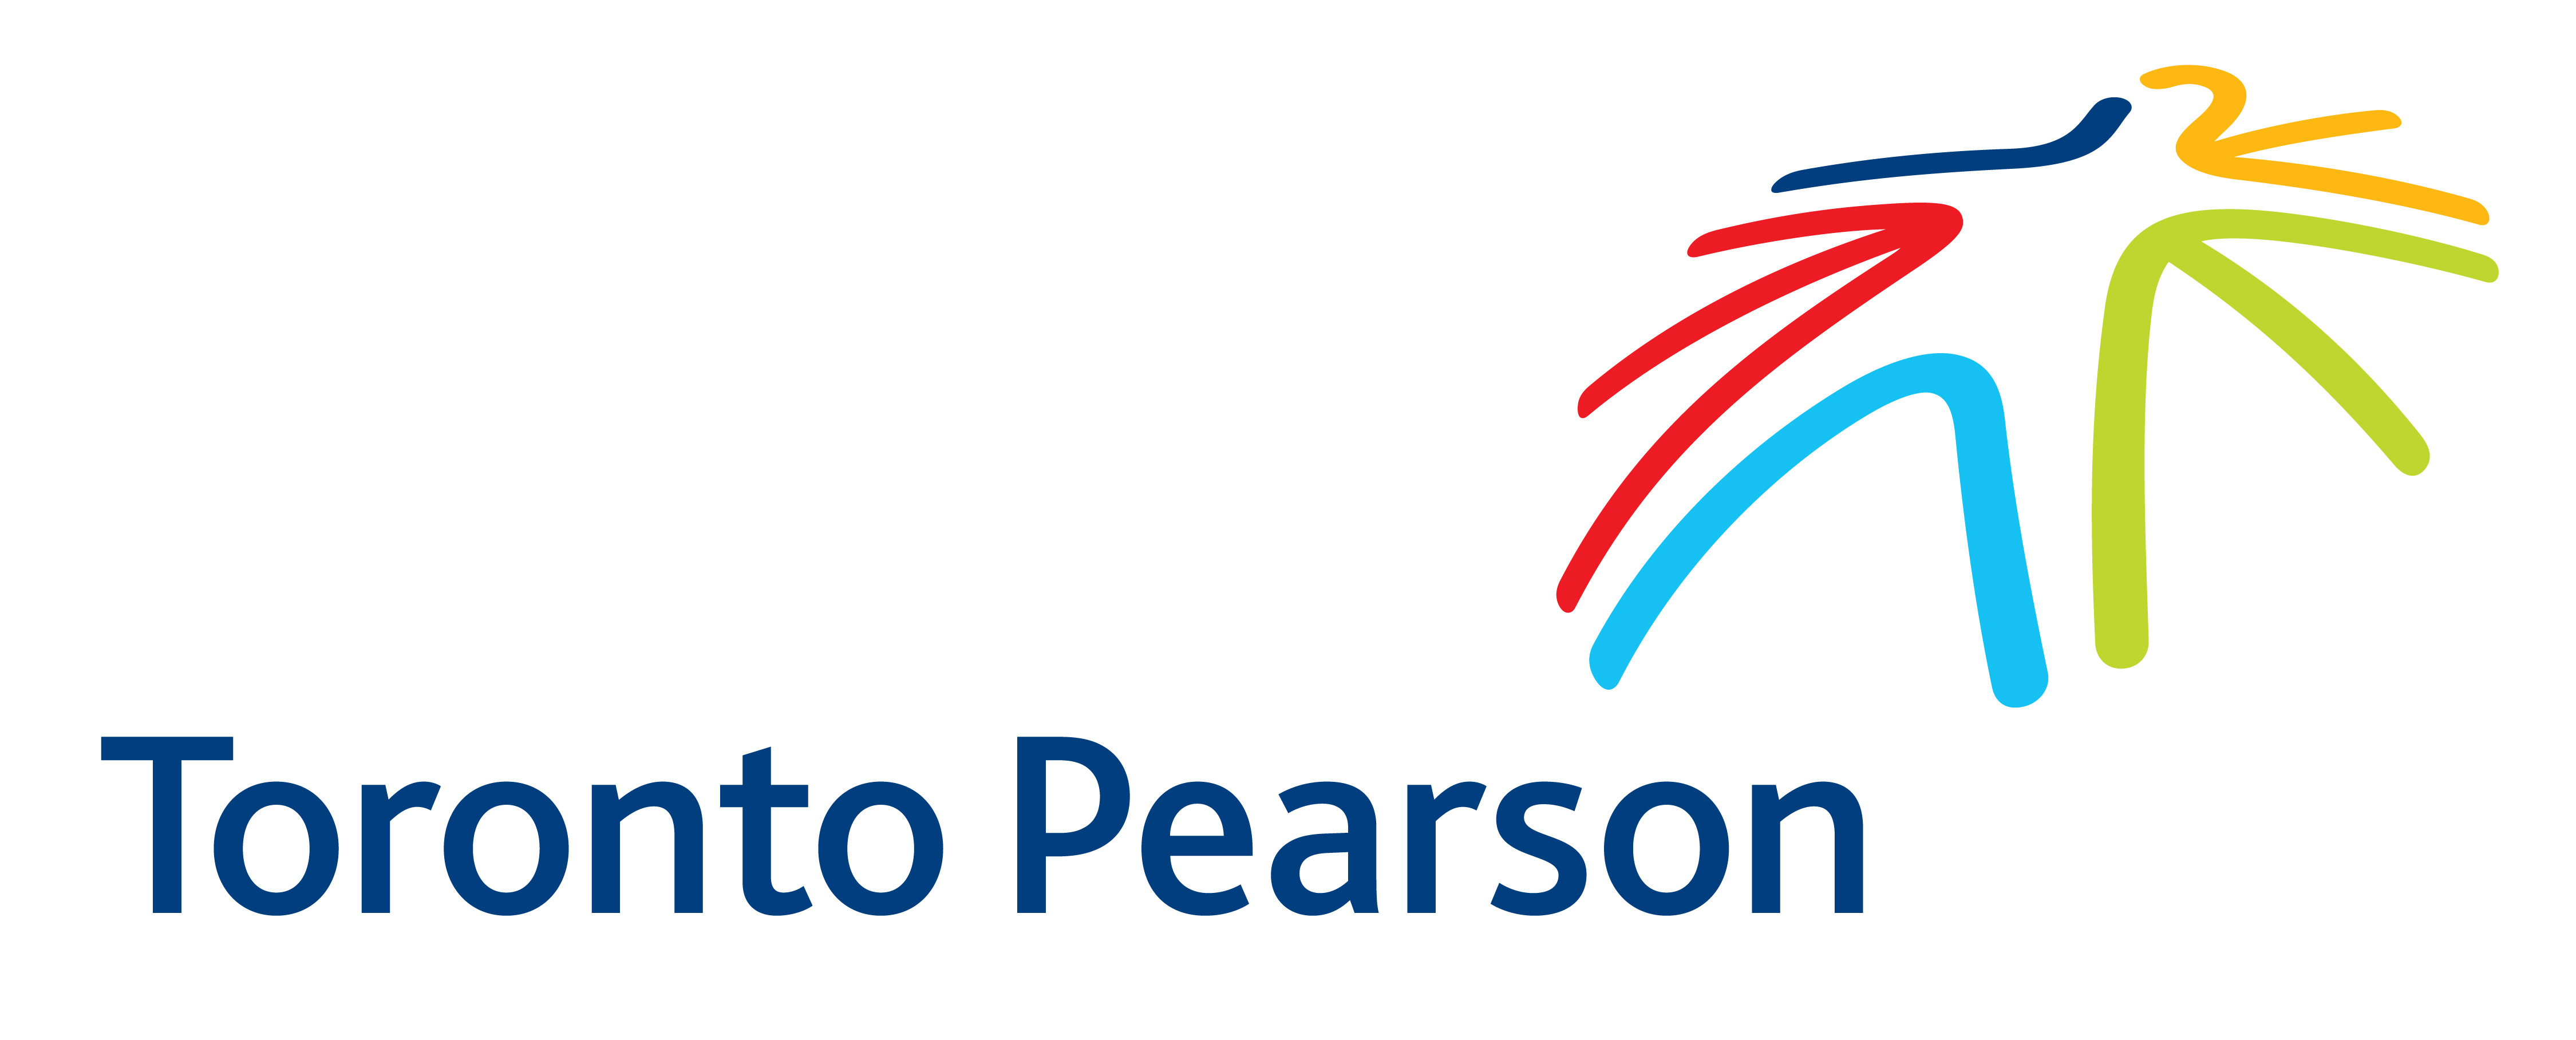 Toronto Pearson - logo